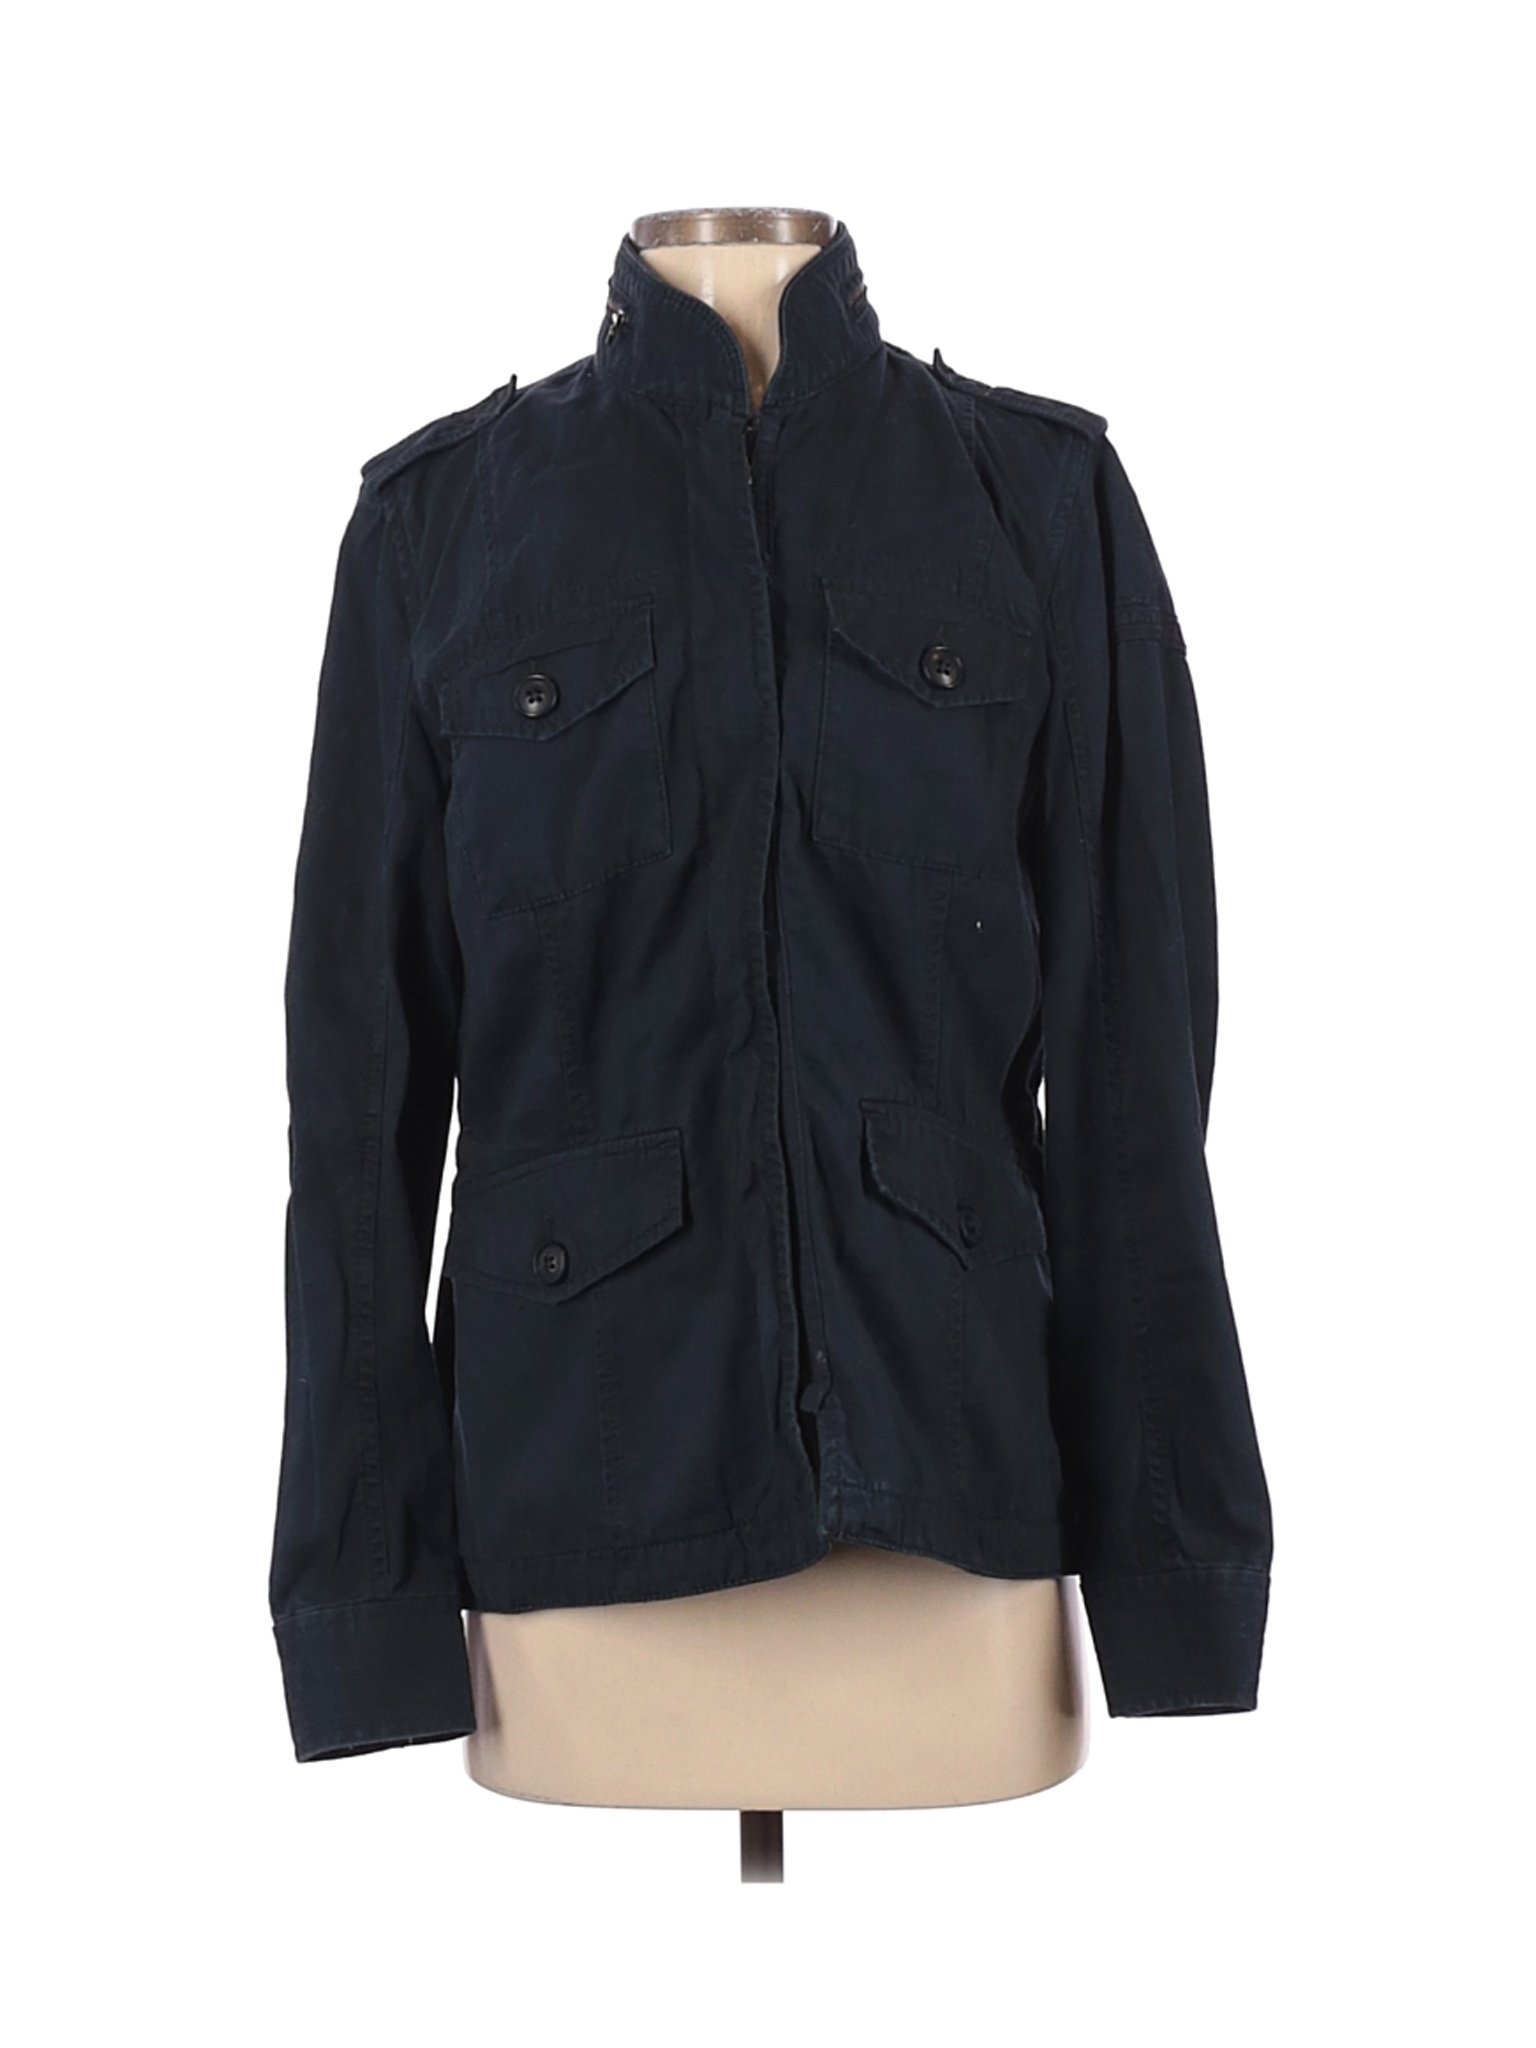 Abercrombie & Fitch Women Black Jacket S | eBay